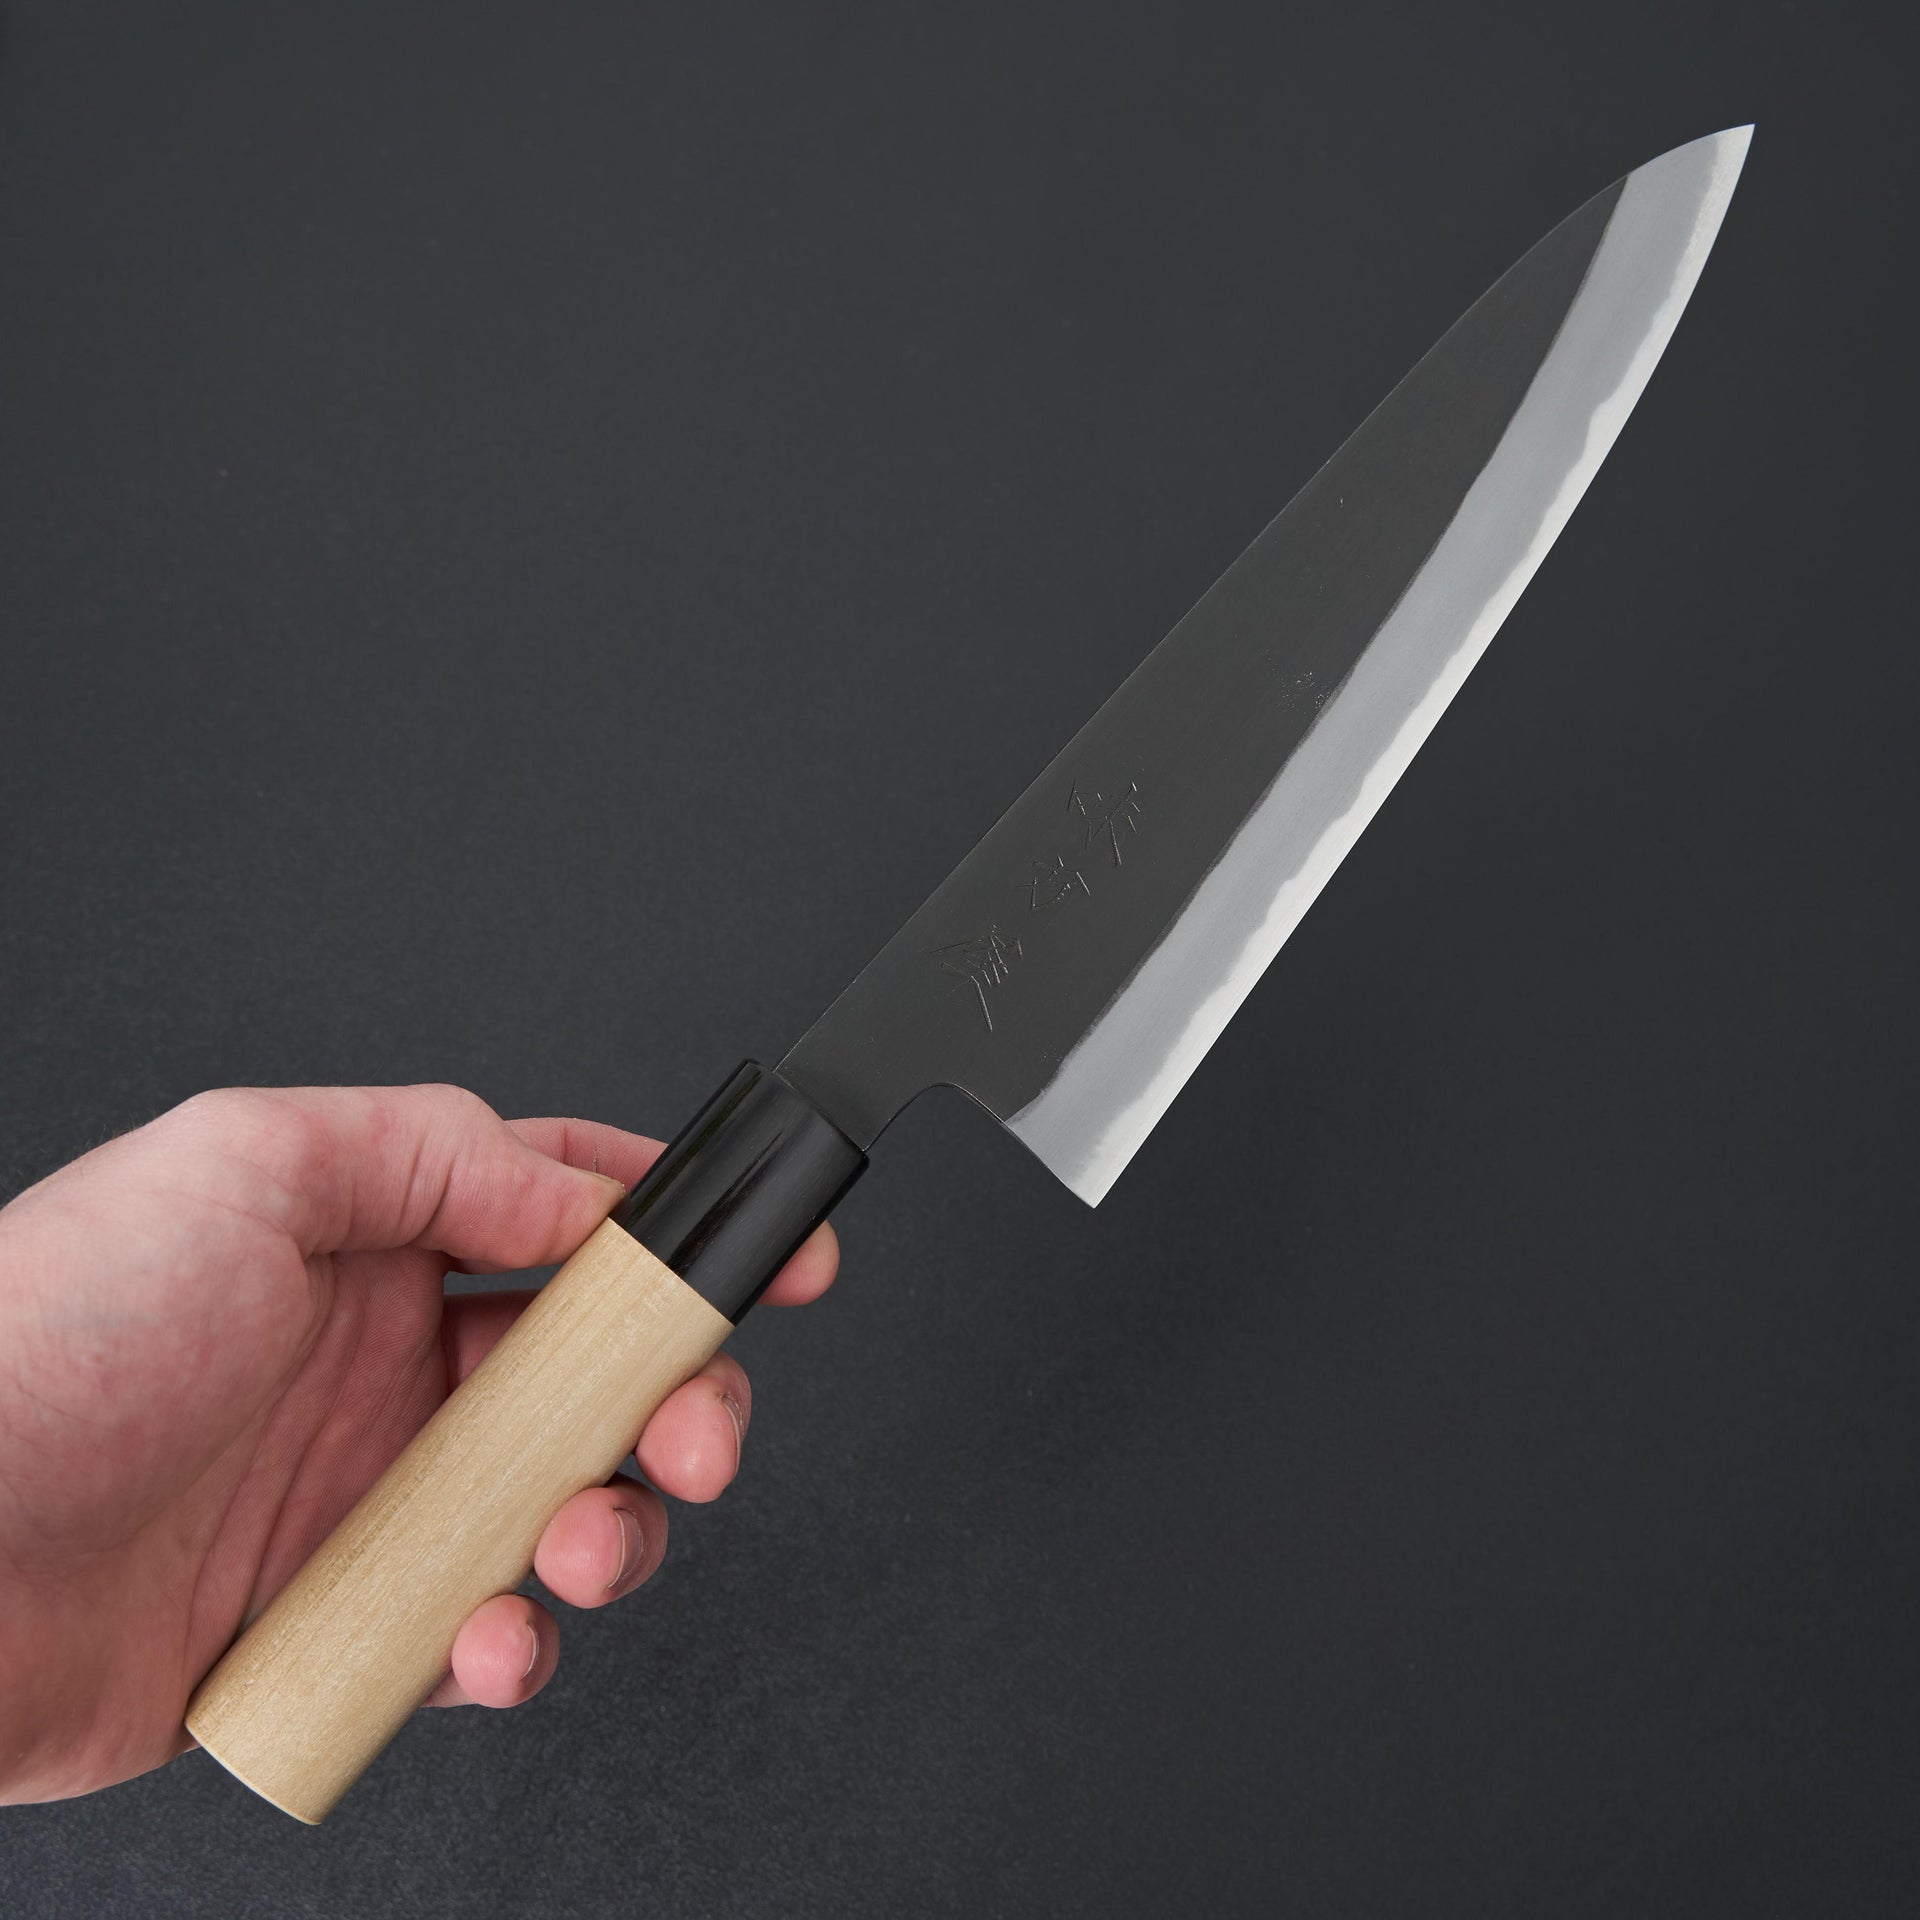 Hinoura Ajikataya Shirogami 2 Kurouchi Gyuto 210mm-Knife-Hinoura-Carbon Knife Co